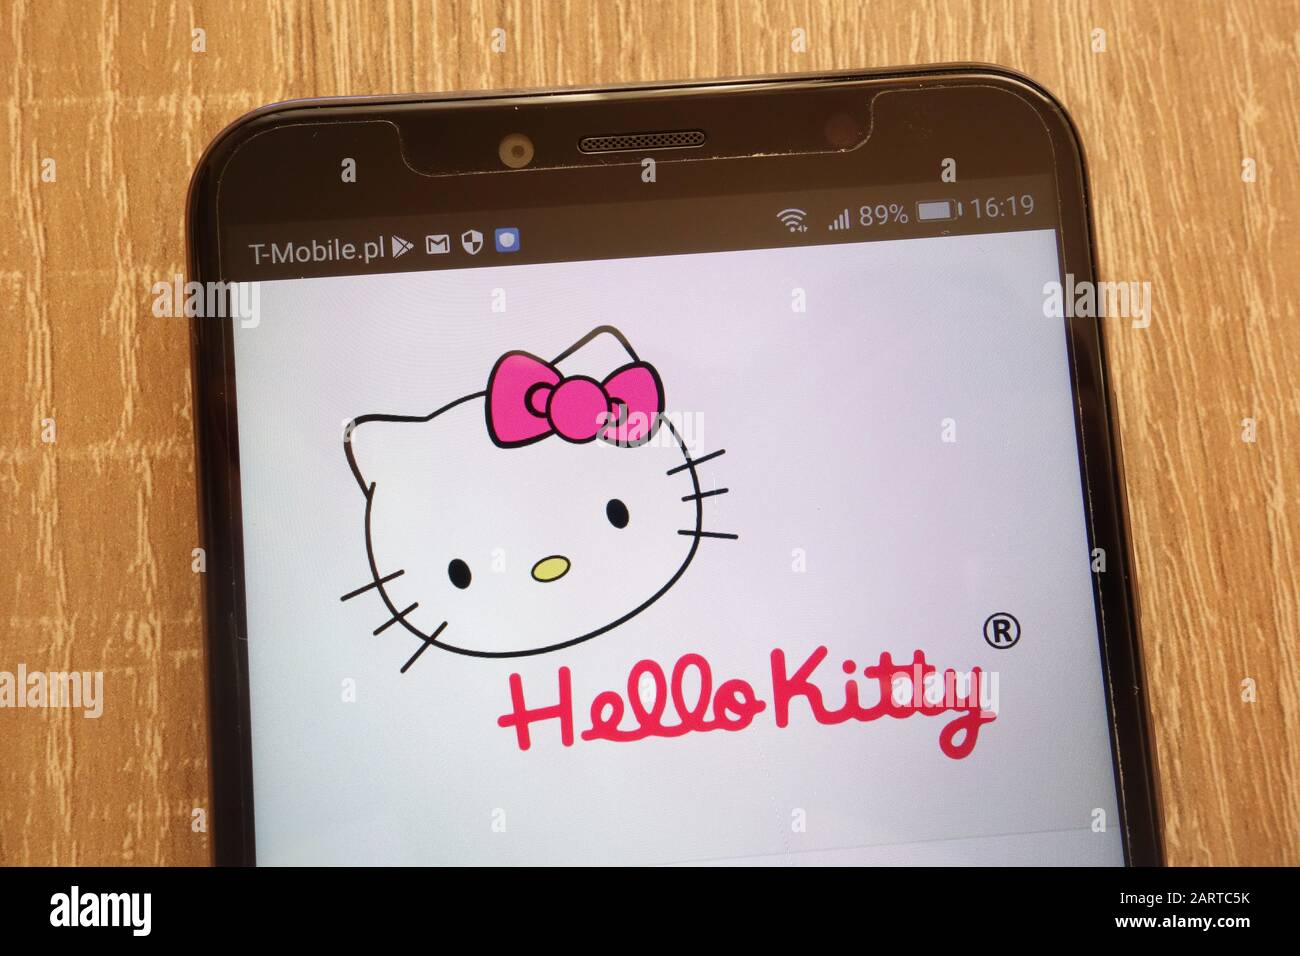 Hello Kitty logo displayed on a modern smartphone Stock Photo